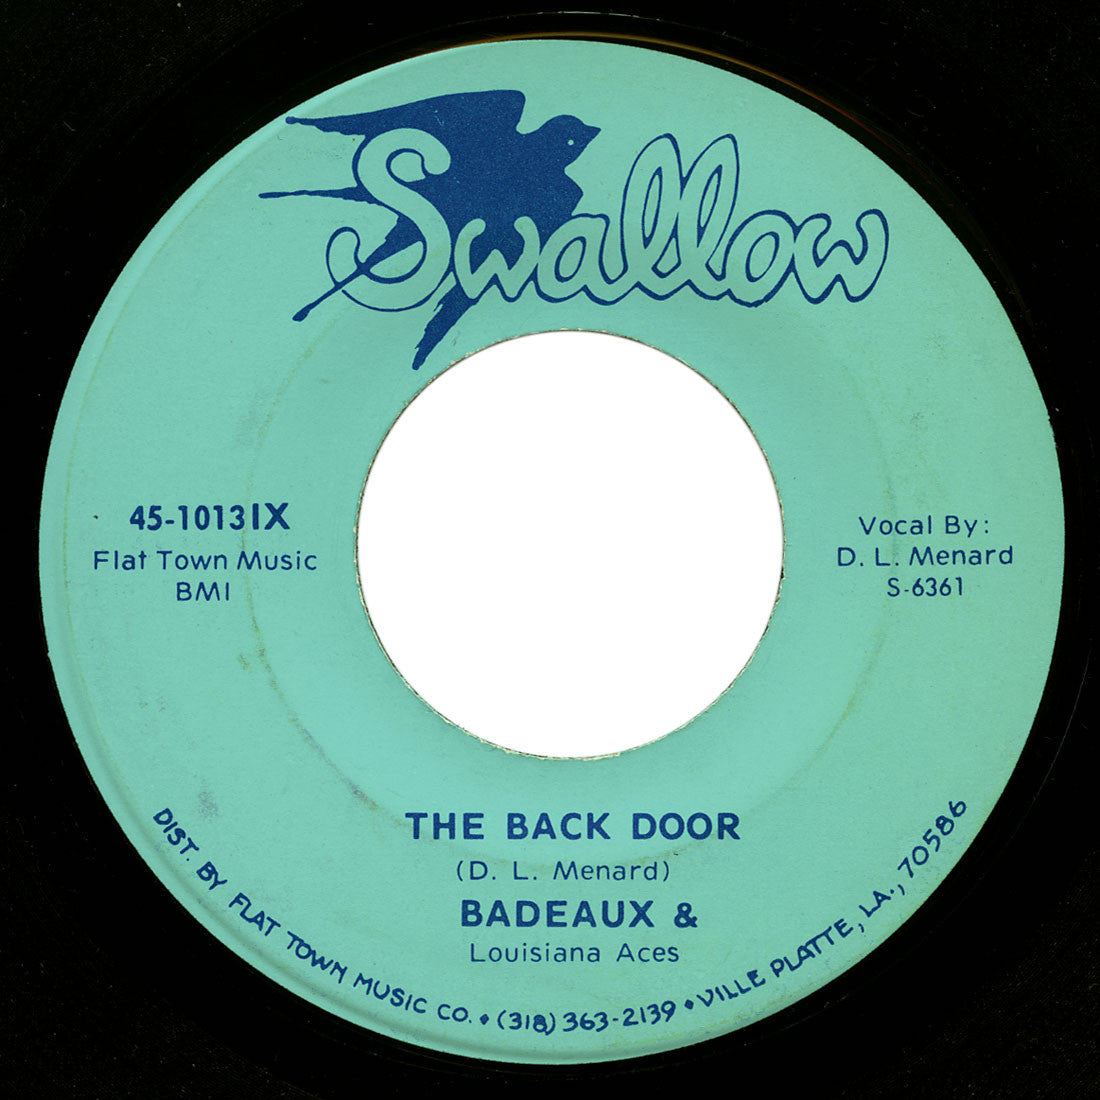 Badeaux & Louisiana Aces – The Back Door – Swallow